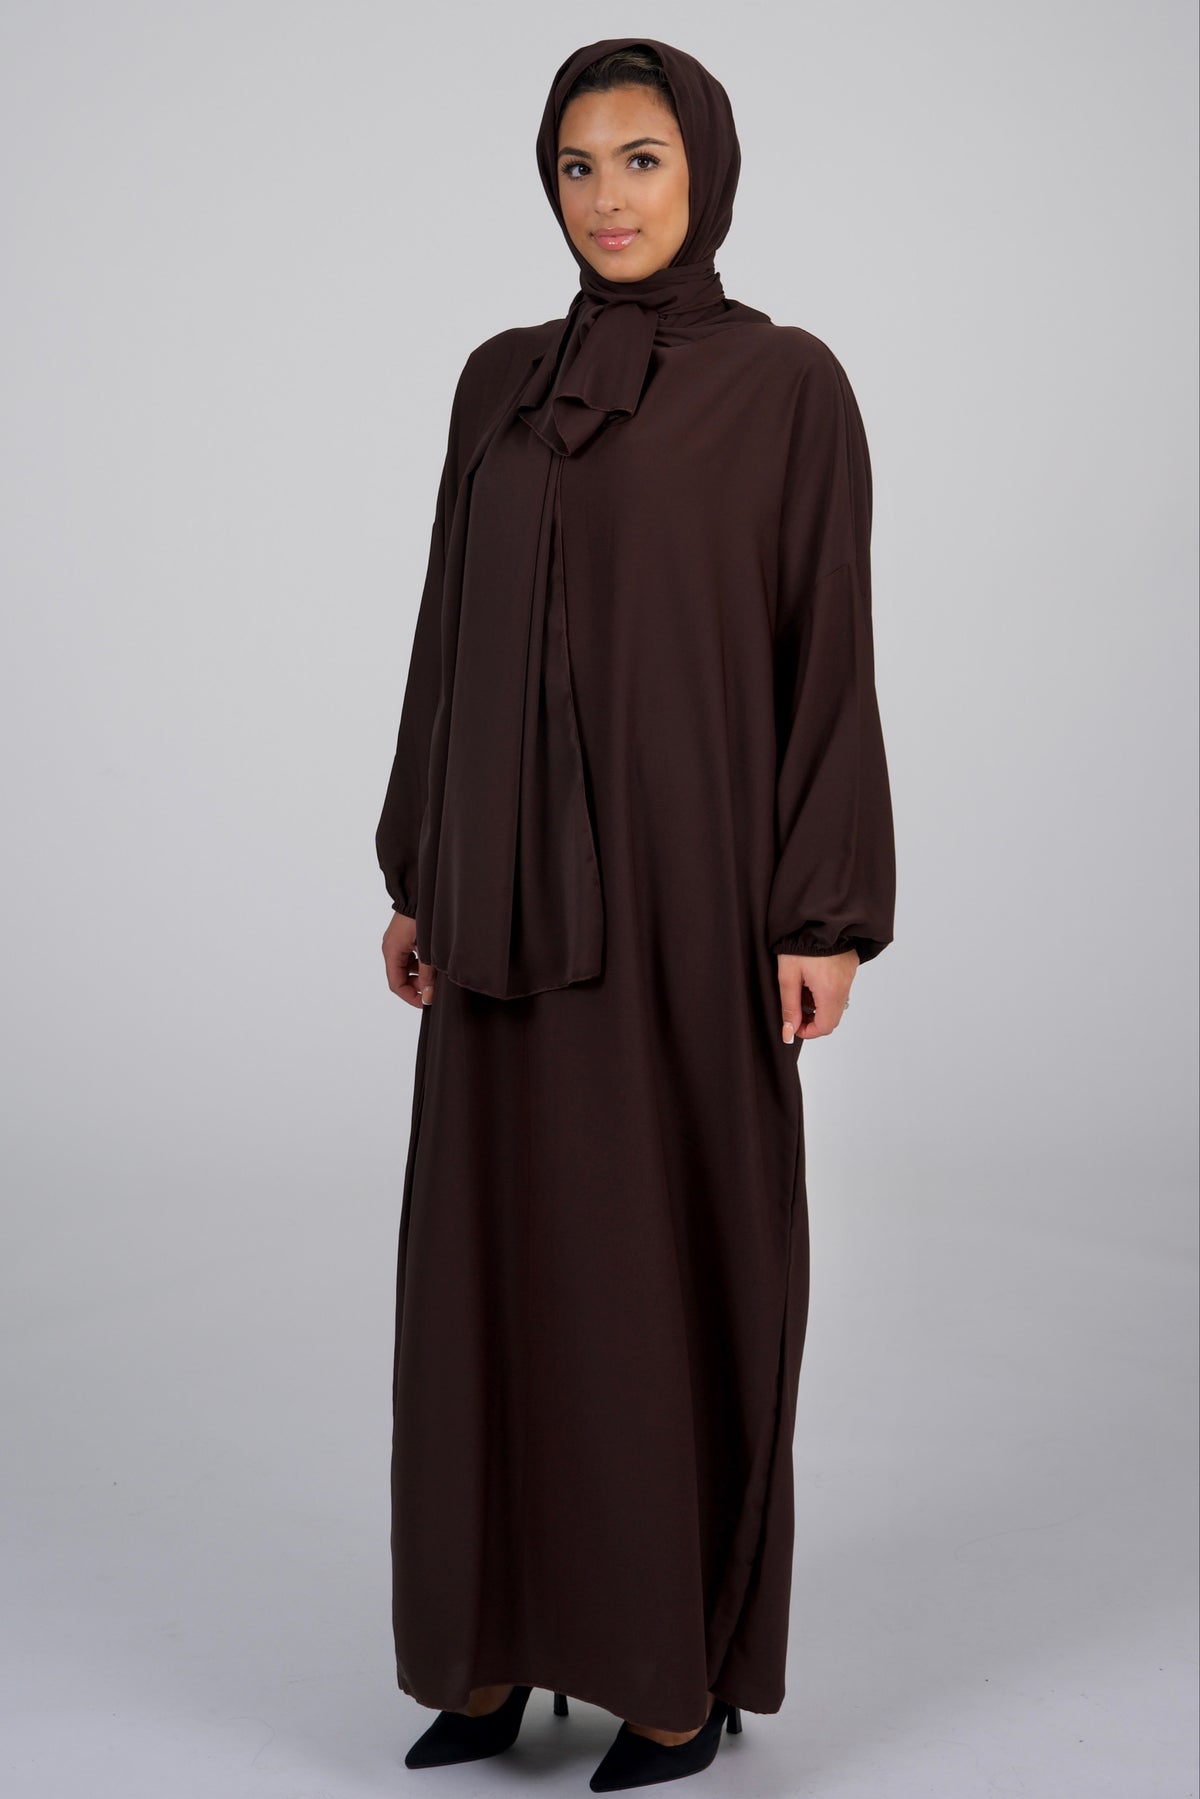 Dark Brown Abaya With Scarf